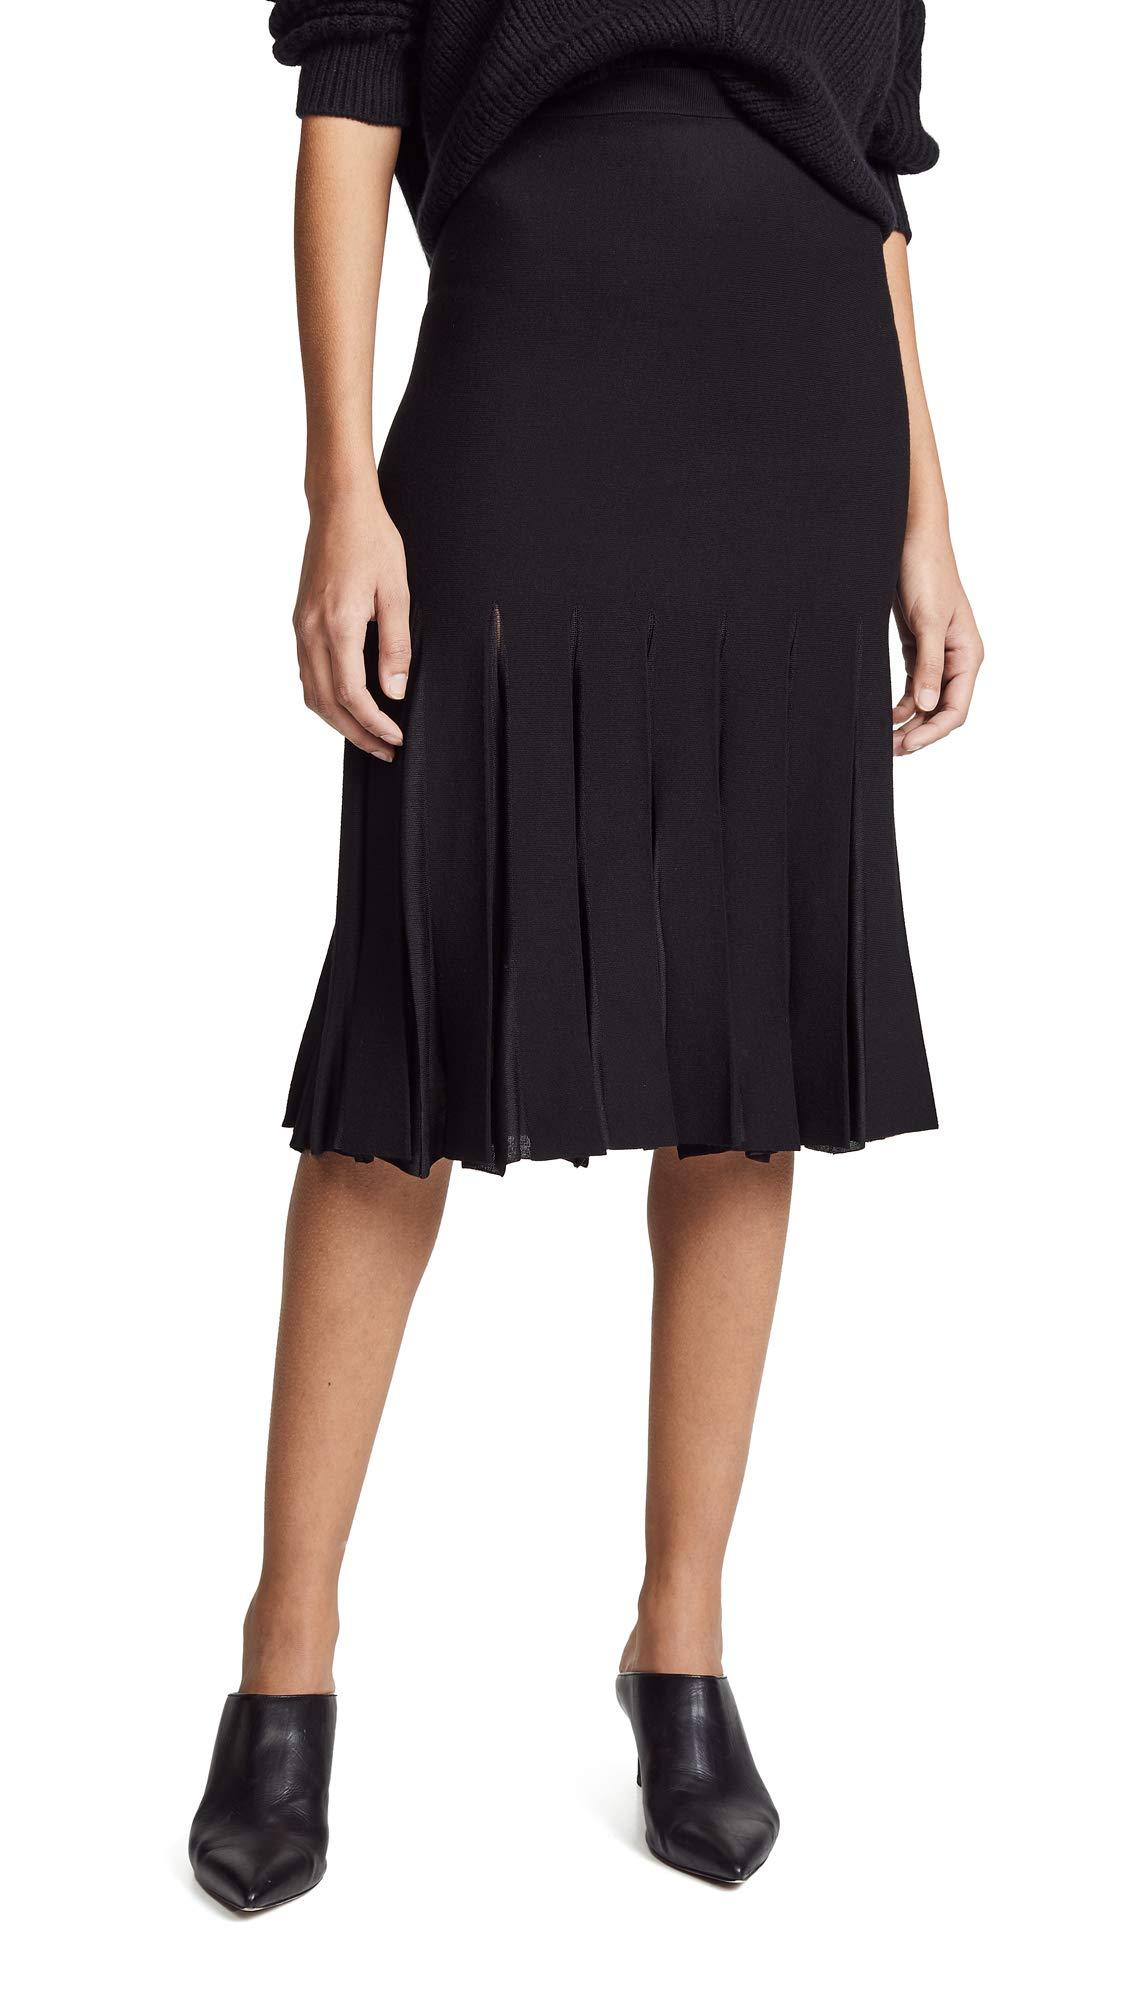 Theory Pleated Skirt in Black/Black (Black) - Lyst